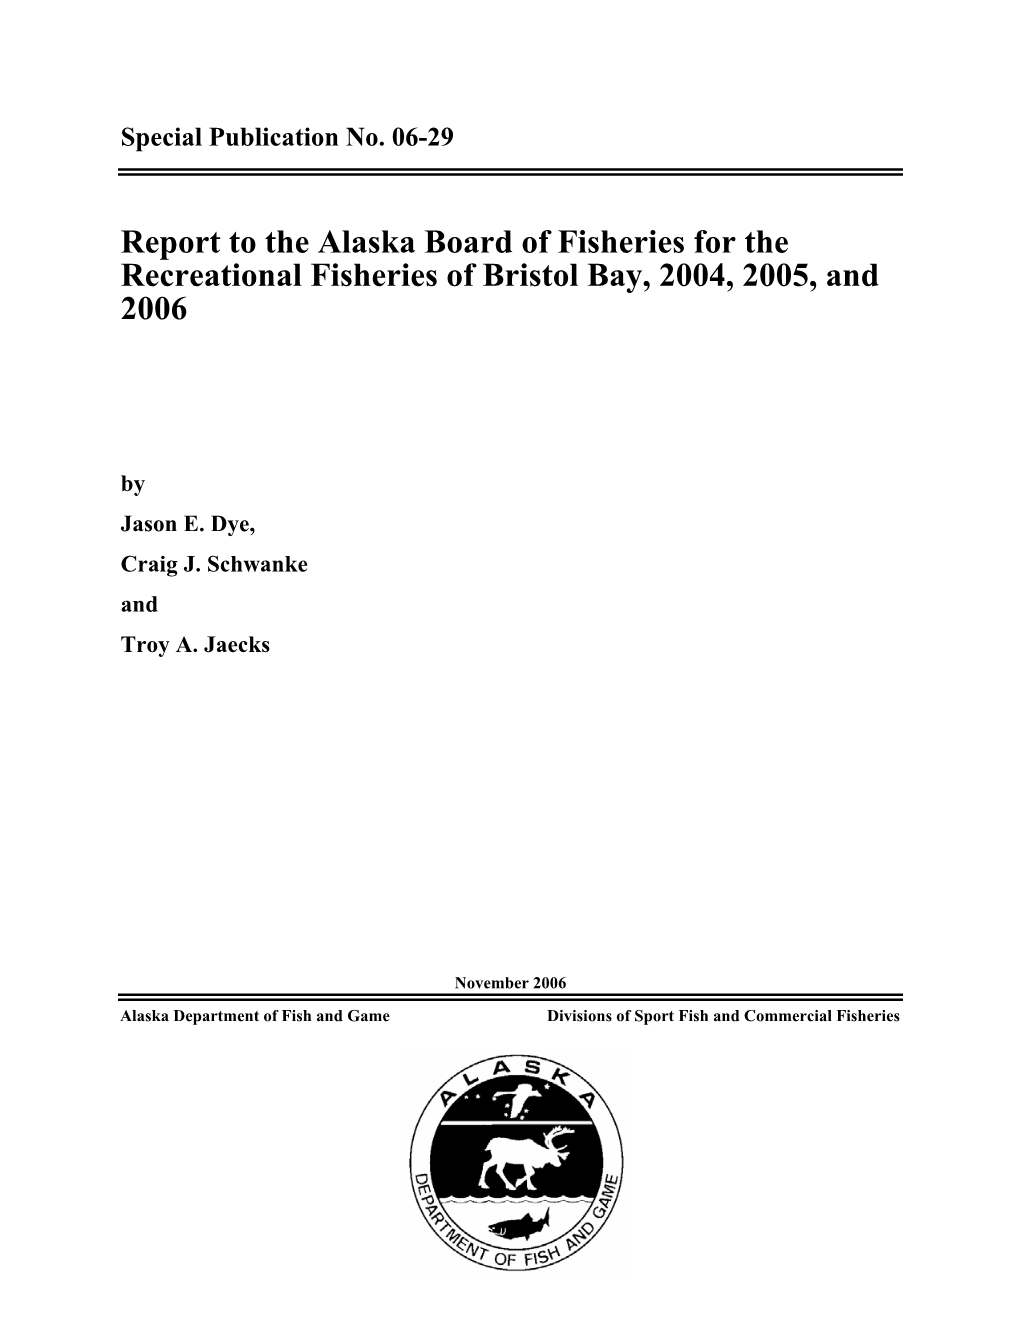 Dye, J. E., C. J. Schwanke, and T. A. Jaecks. 2006. Report to the Alaska Board of Fisheries